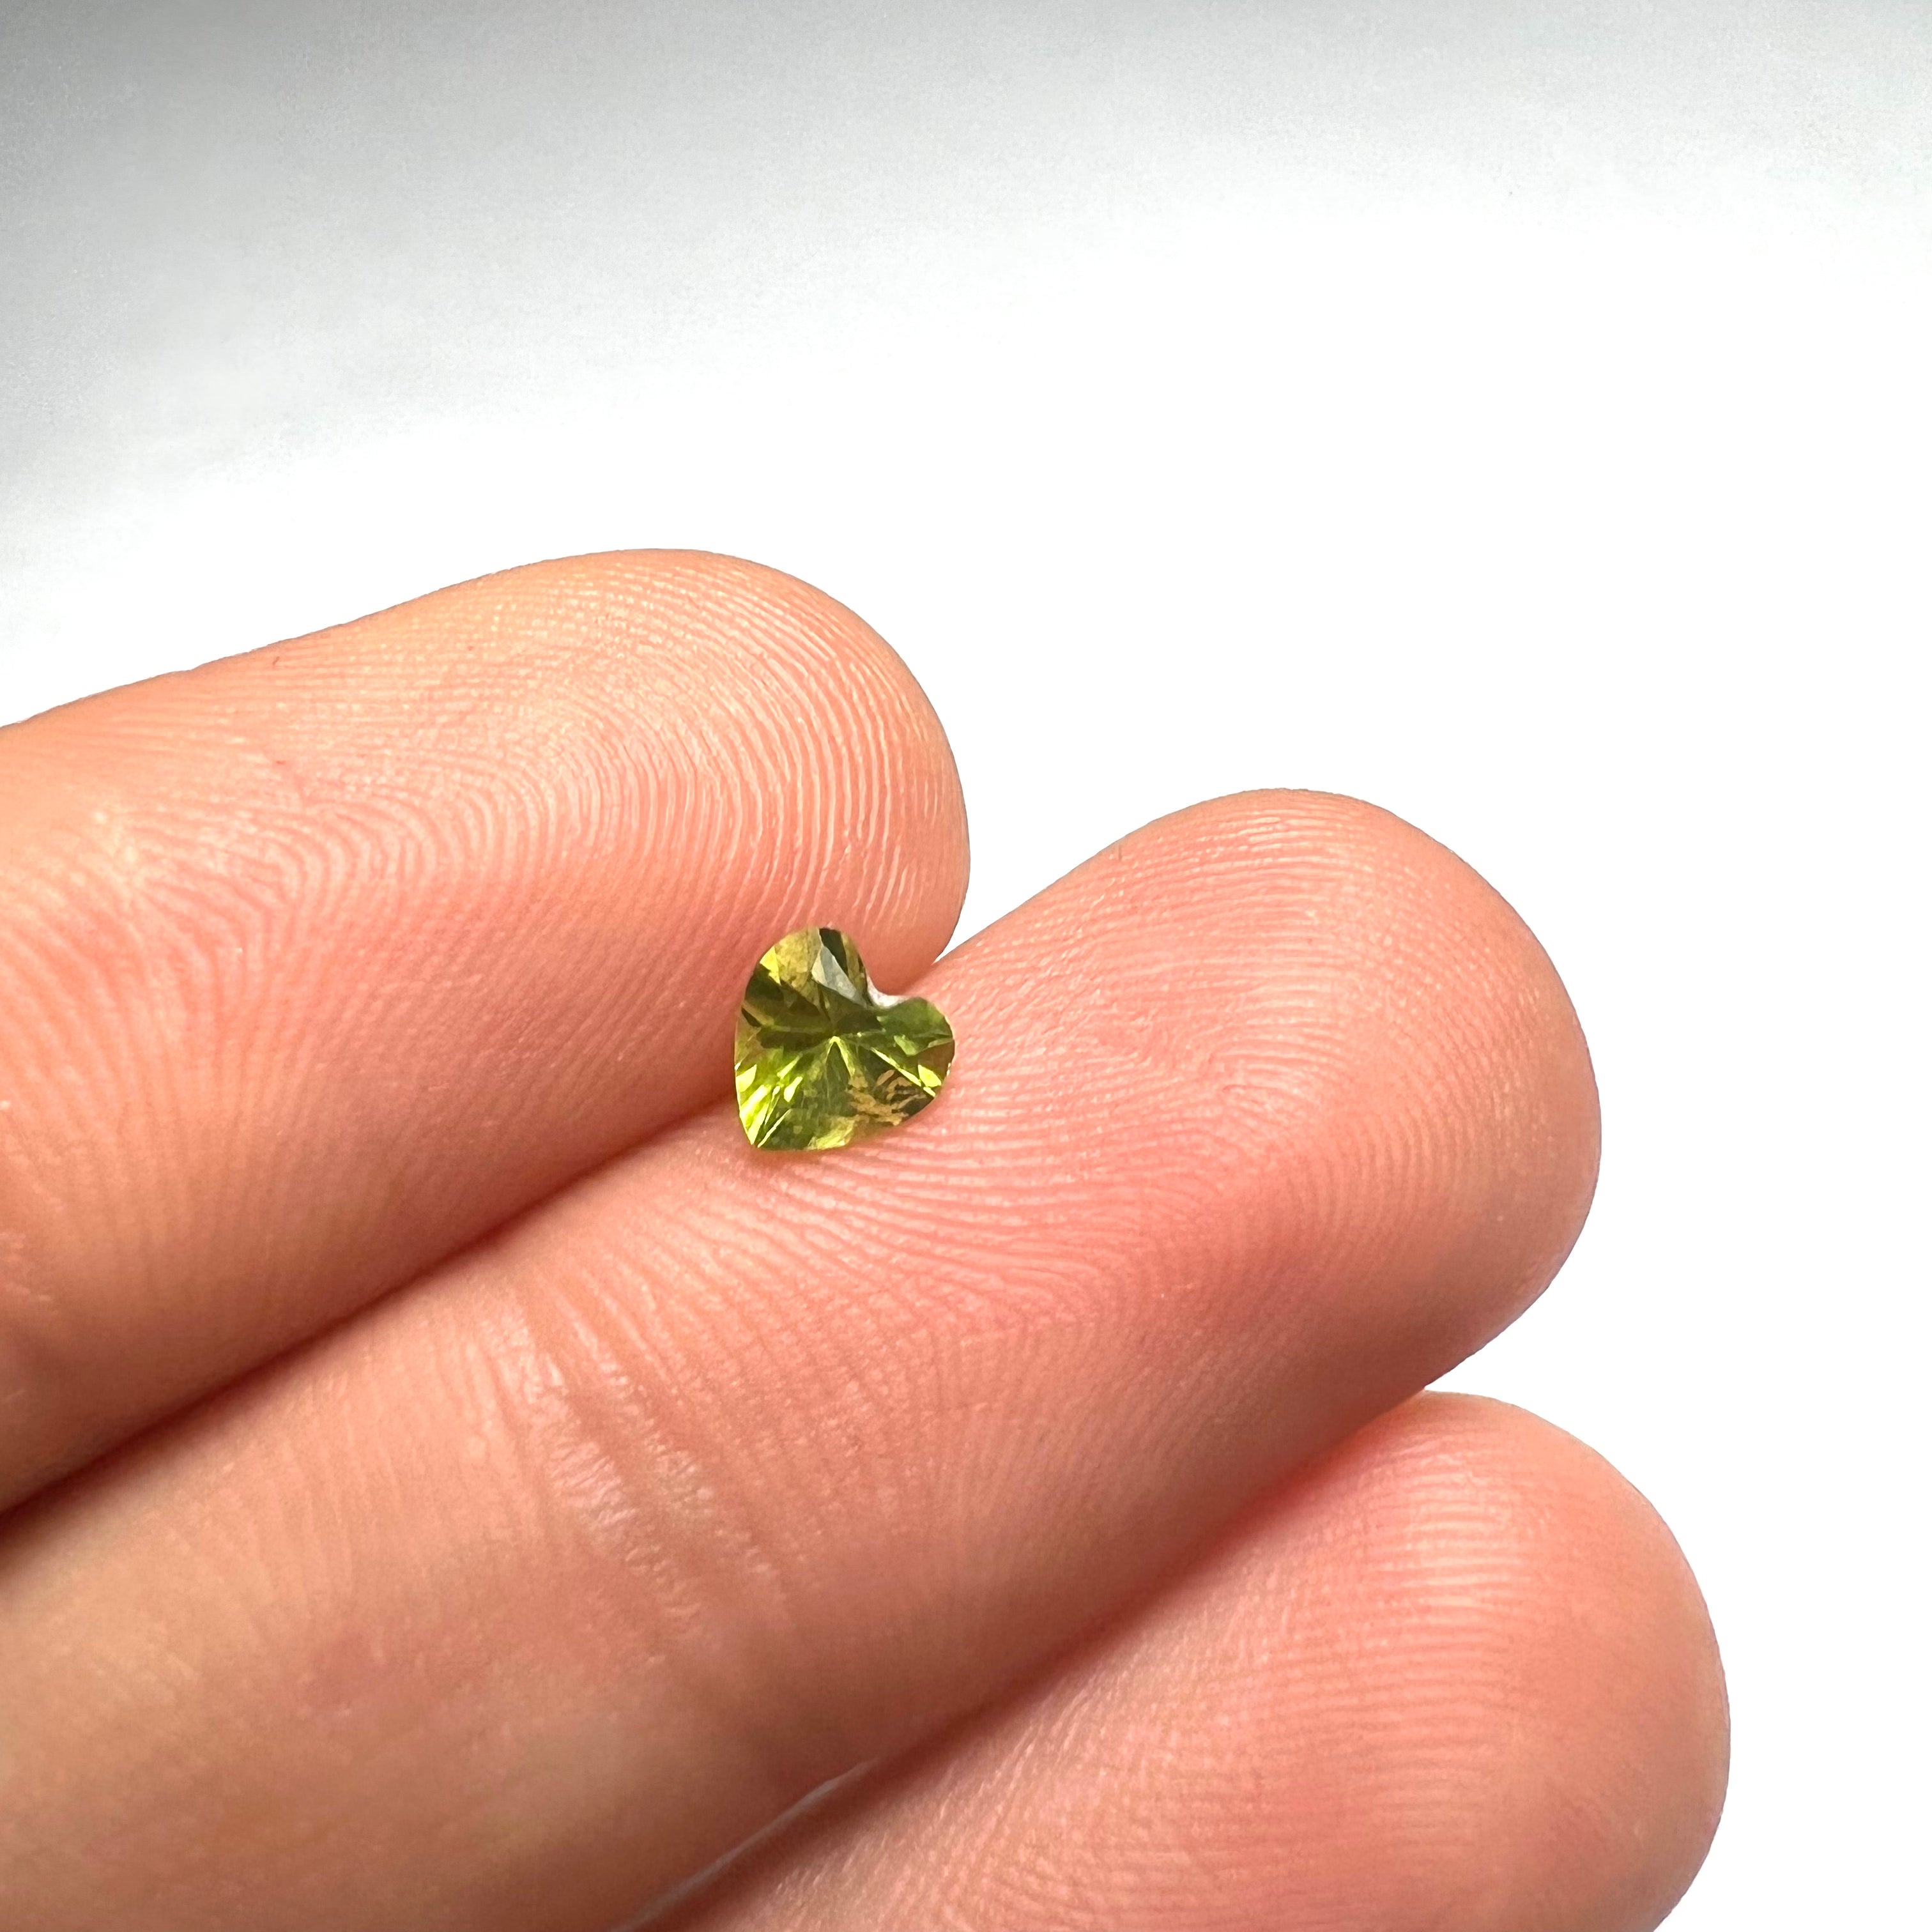 .45CT Loose Natural Heart Cut Peridot 5x3mm Earth mined Gemstone